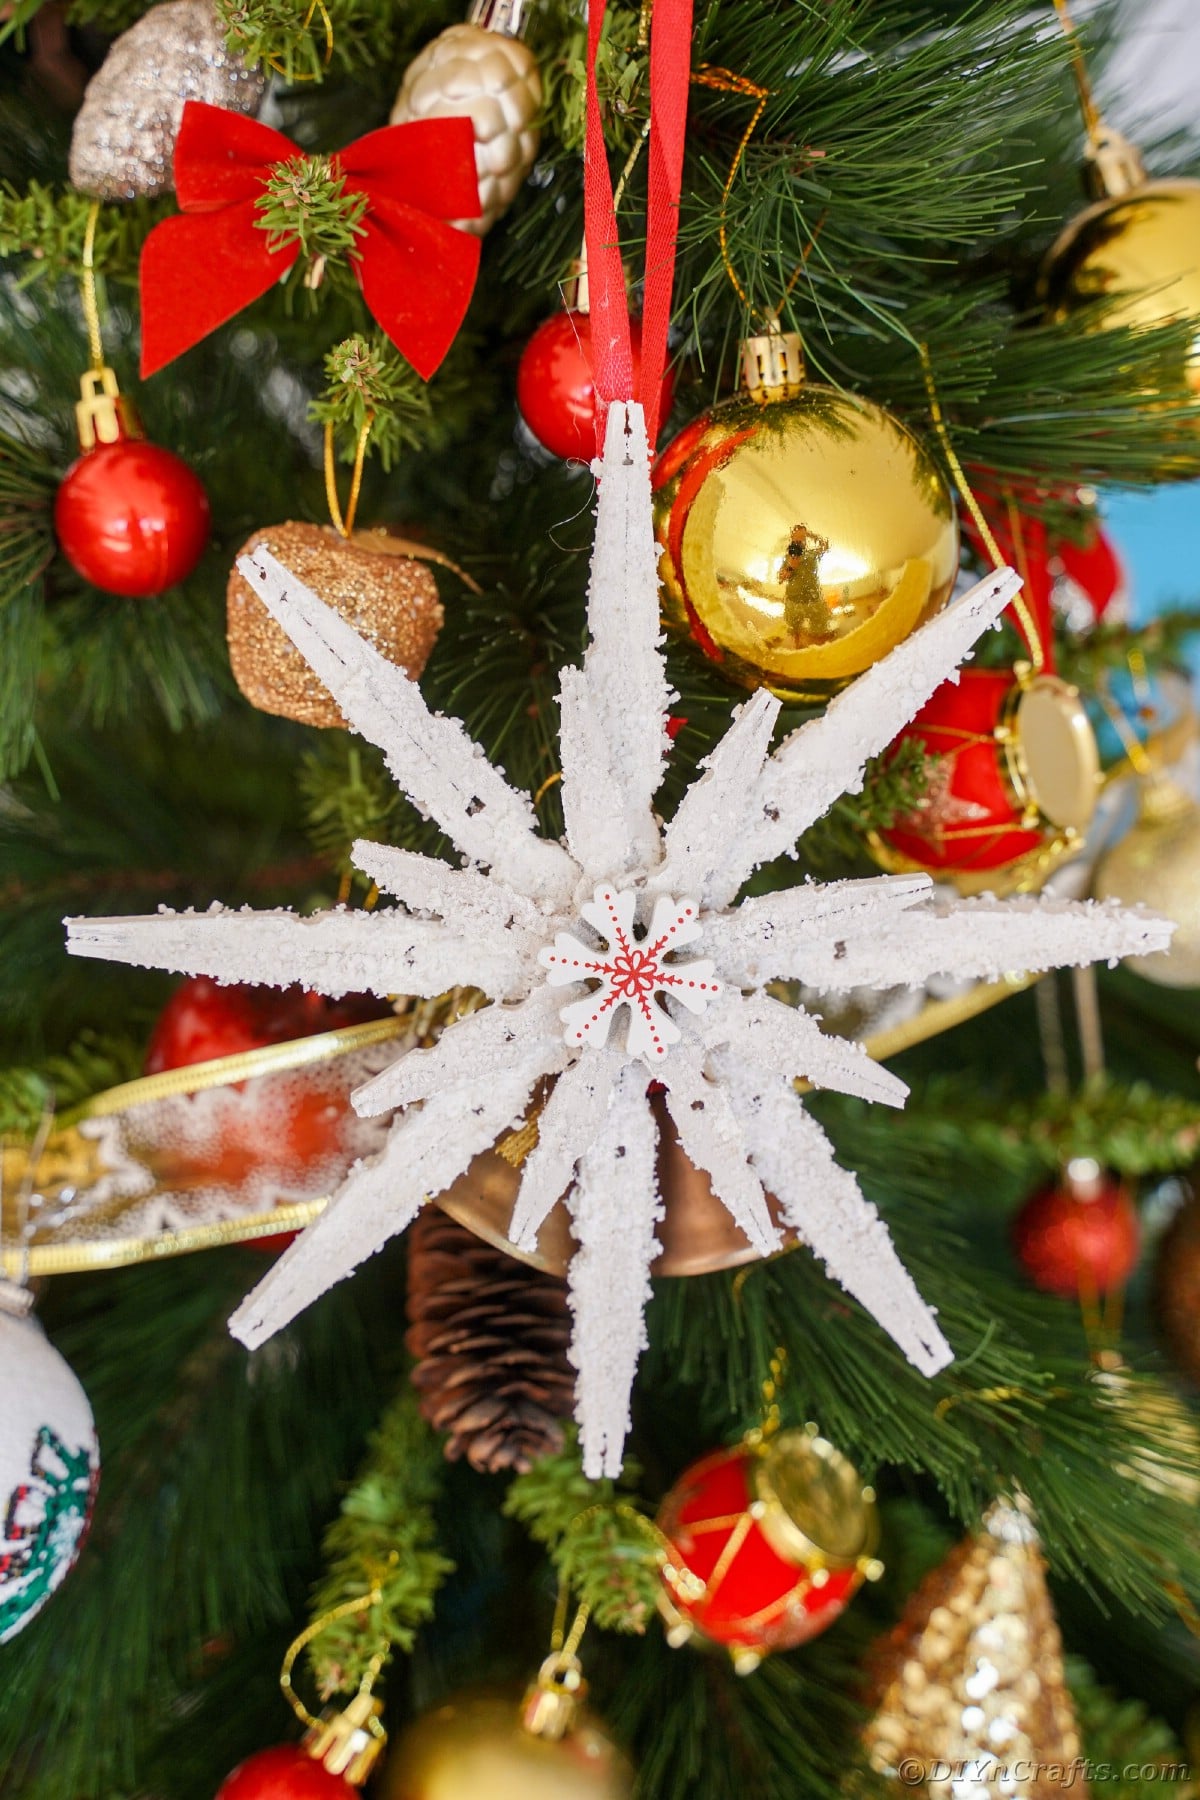 clothespin snowflake hanging on christmas tree